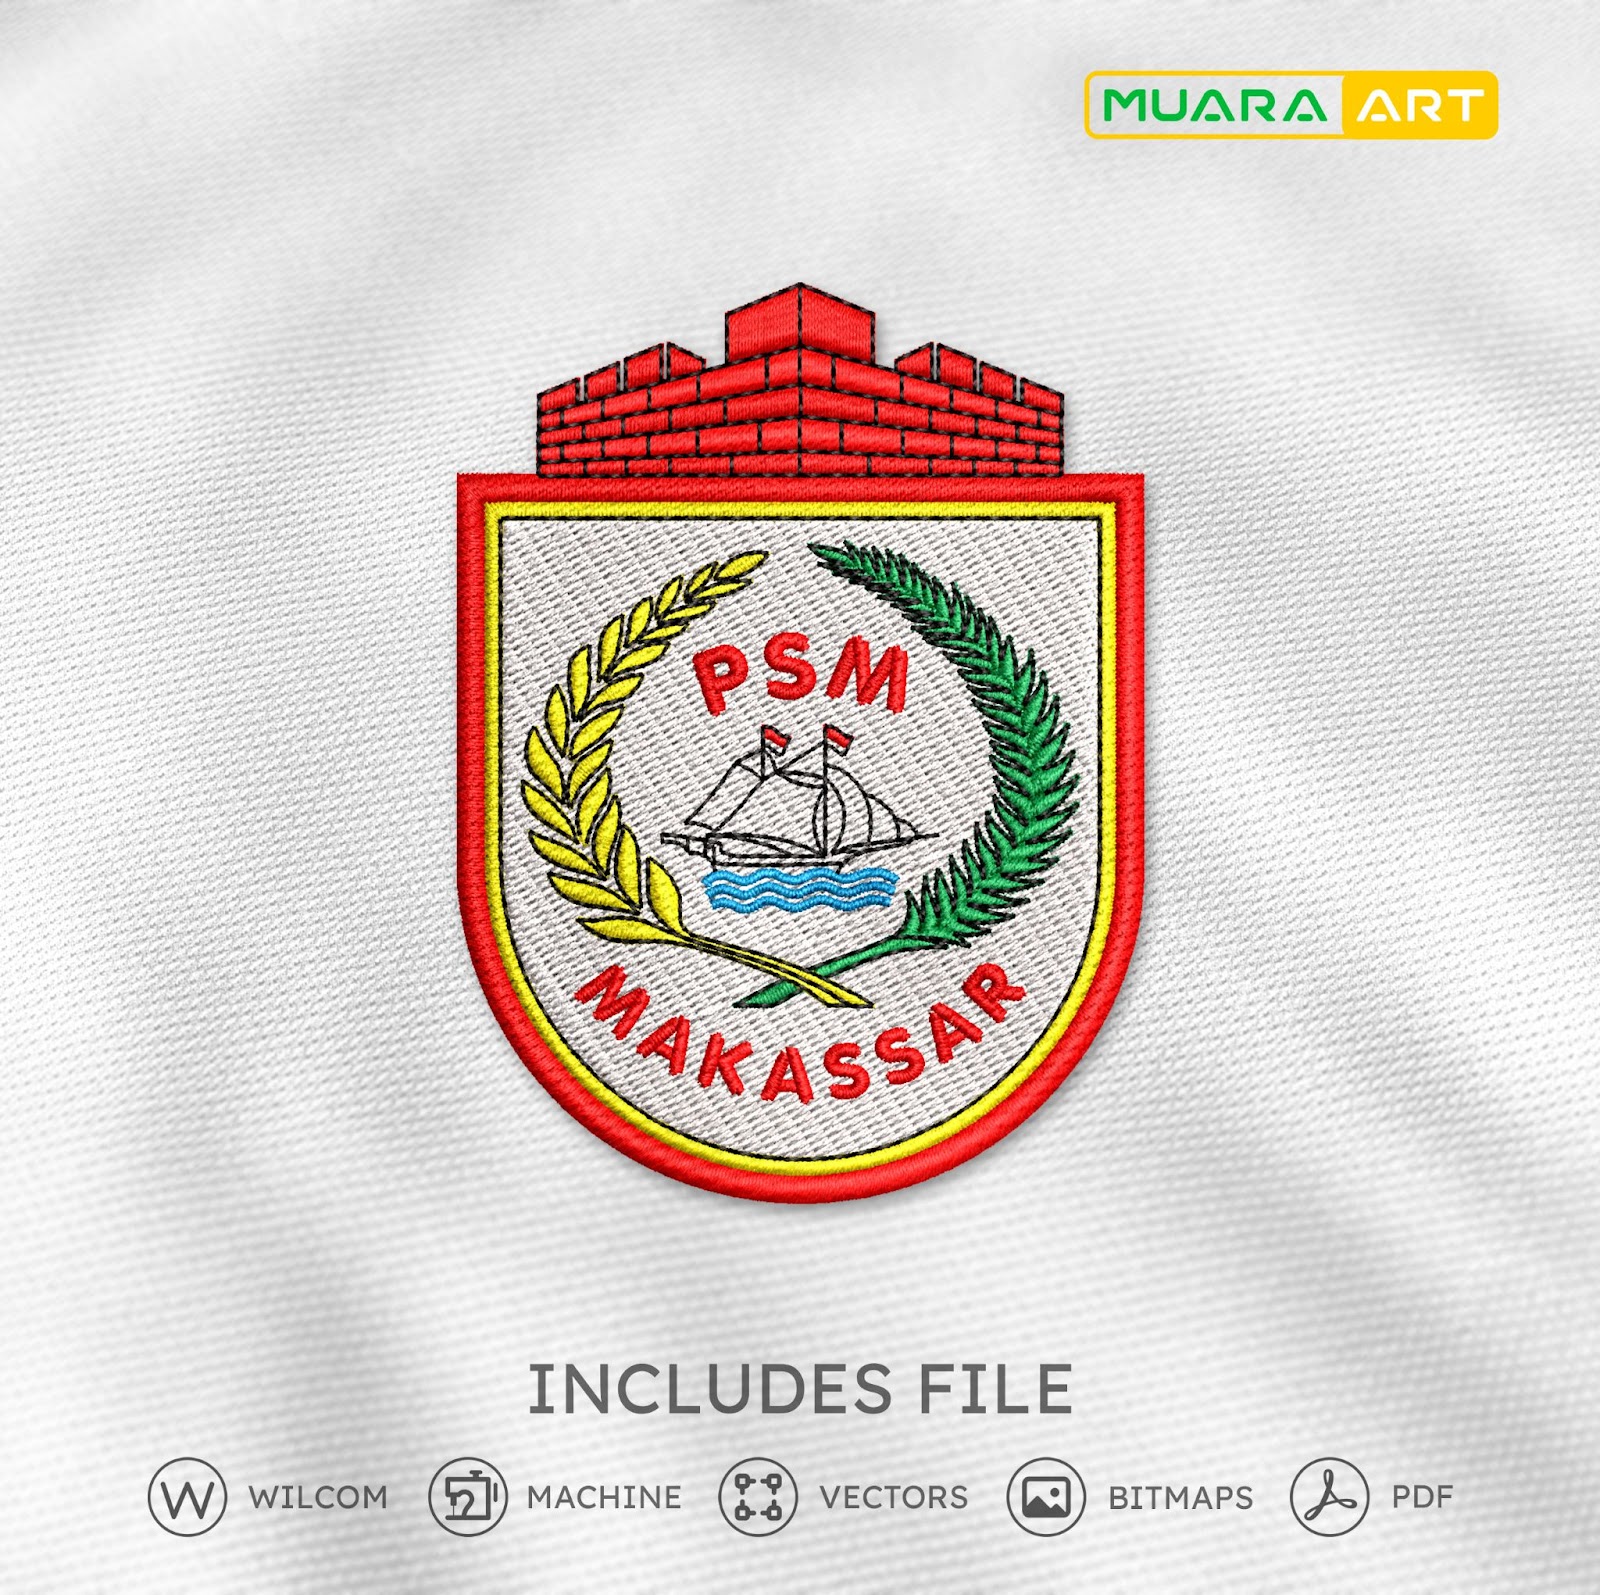 Desain Bordir Logo PSM (Makassar)